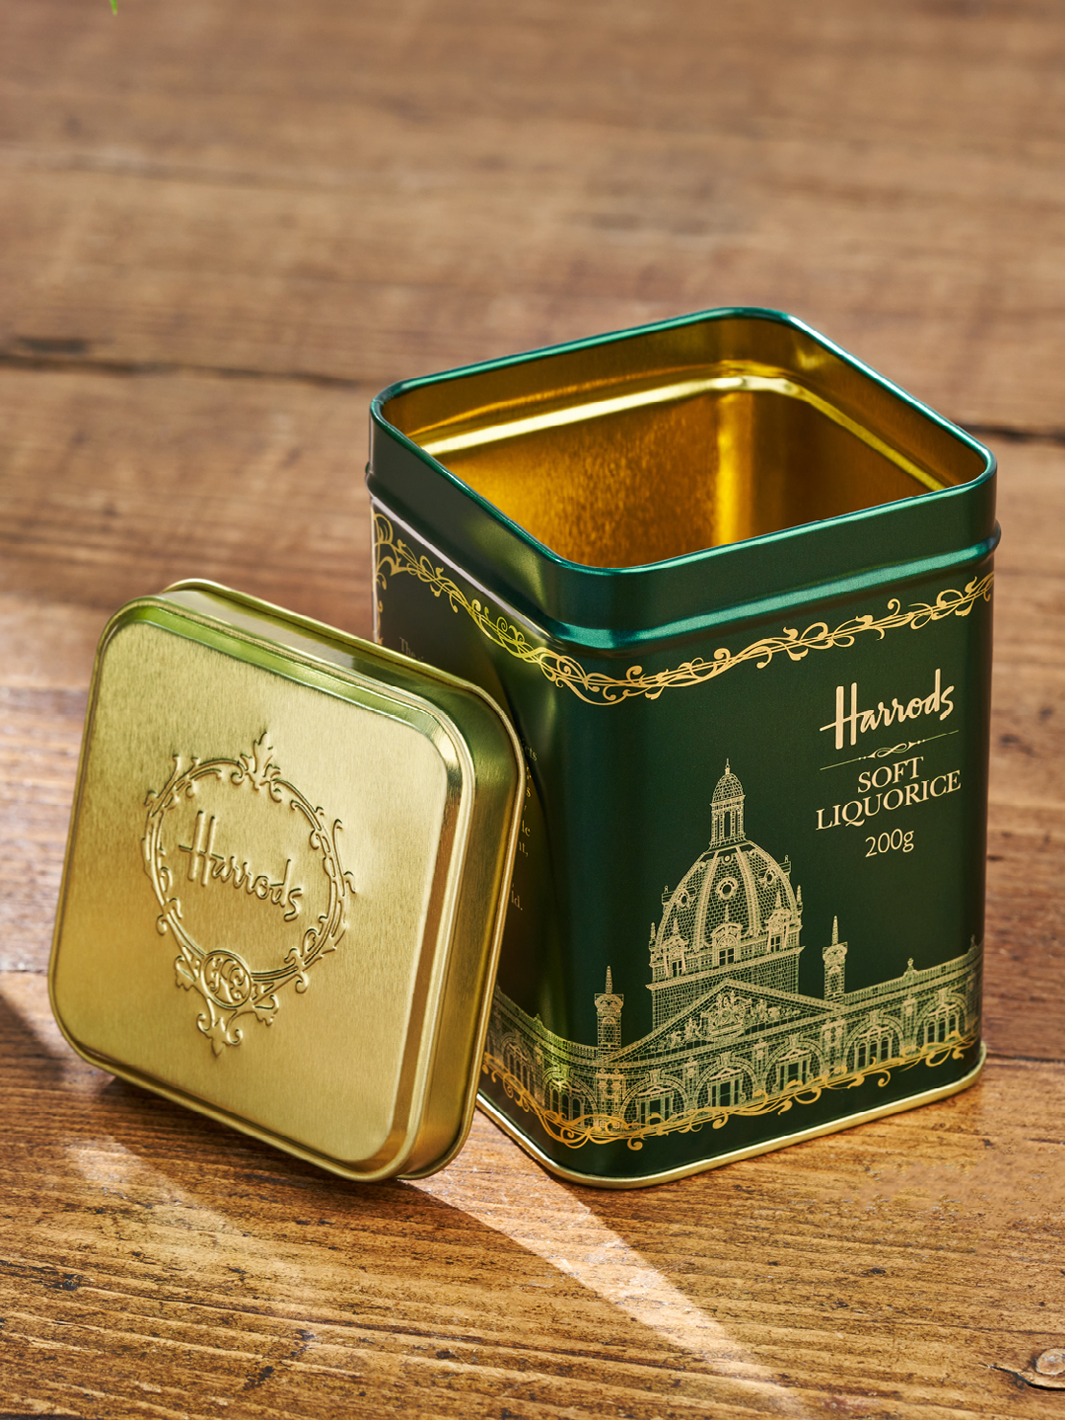 Reflex gold tin packaging designed for Harrods soft liquorice. 